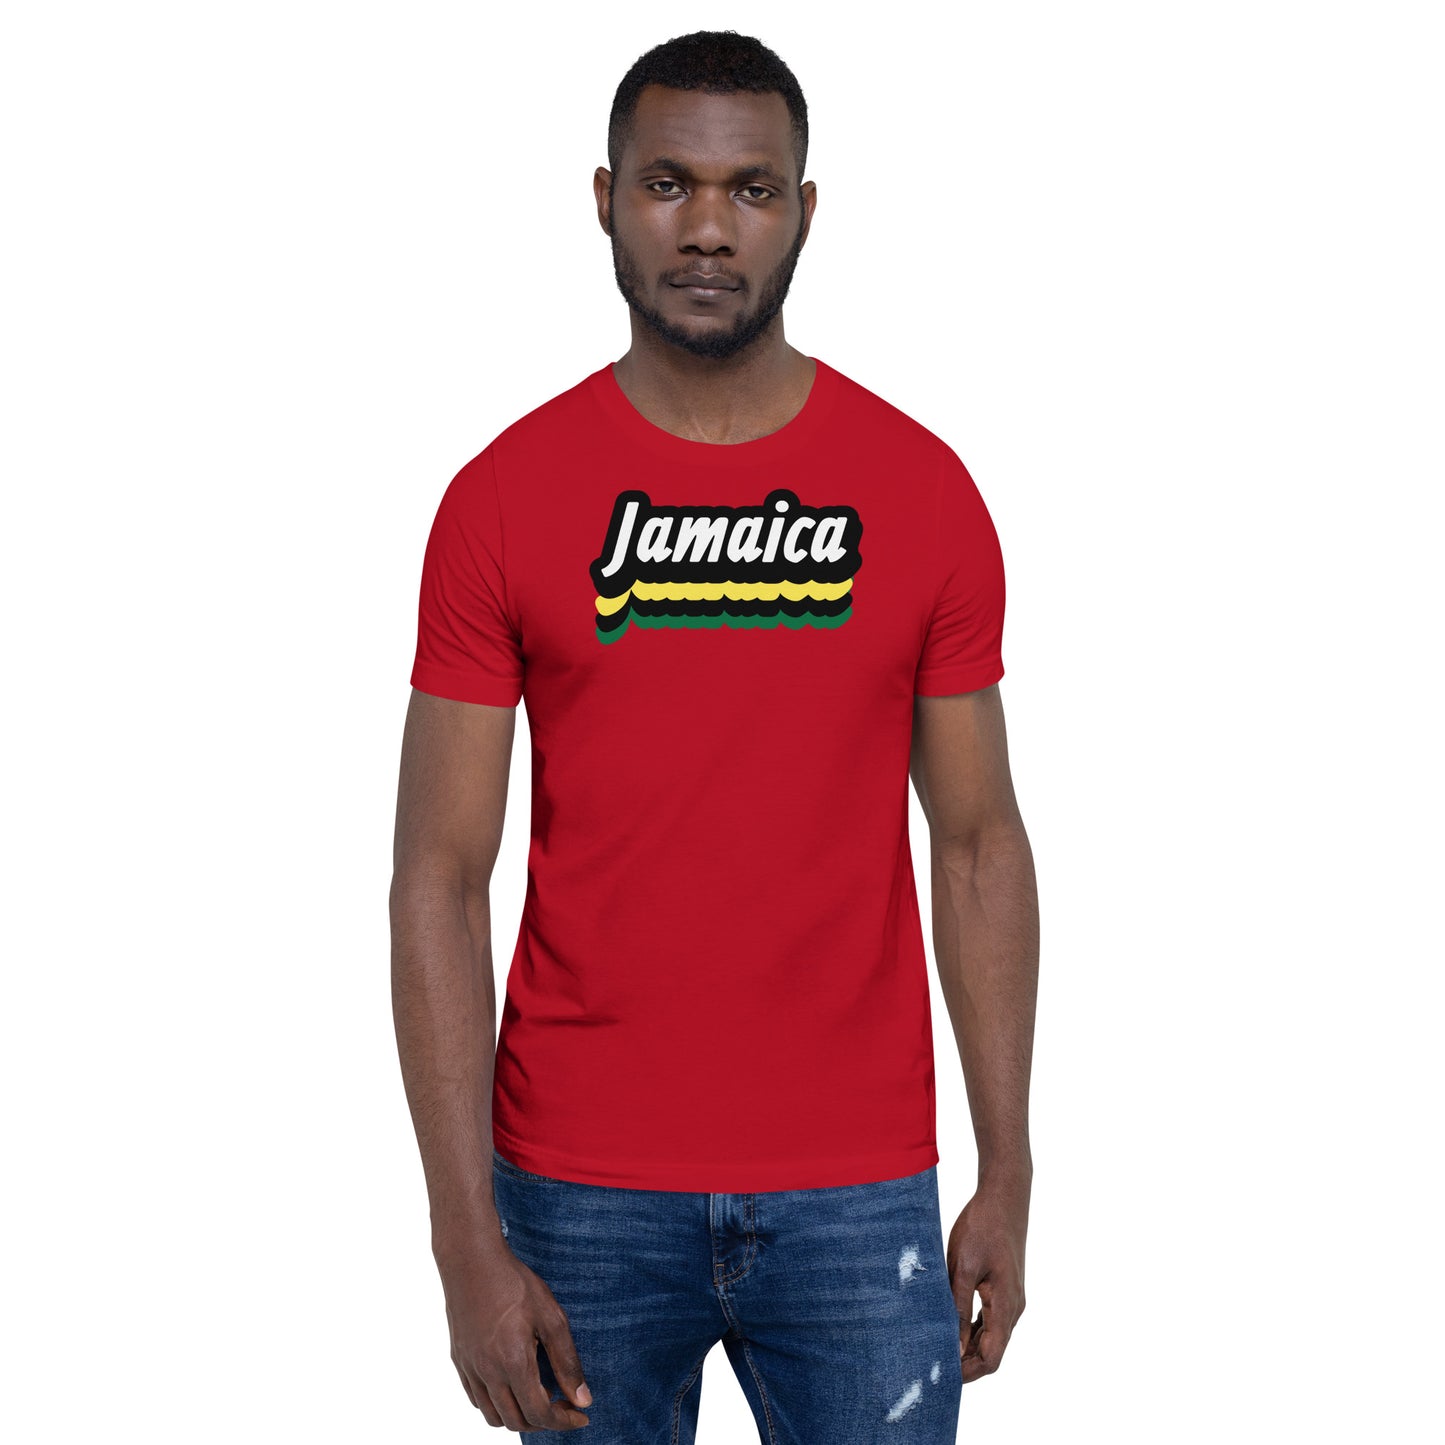 Jamaica Graphic Short-Sleeve Unisex T-Shirt